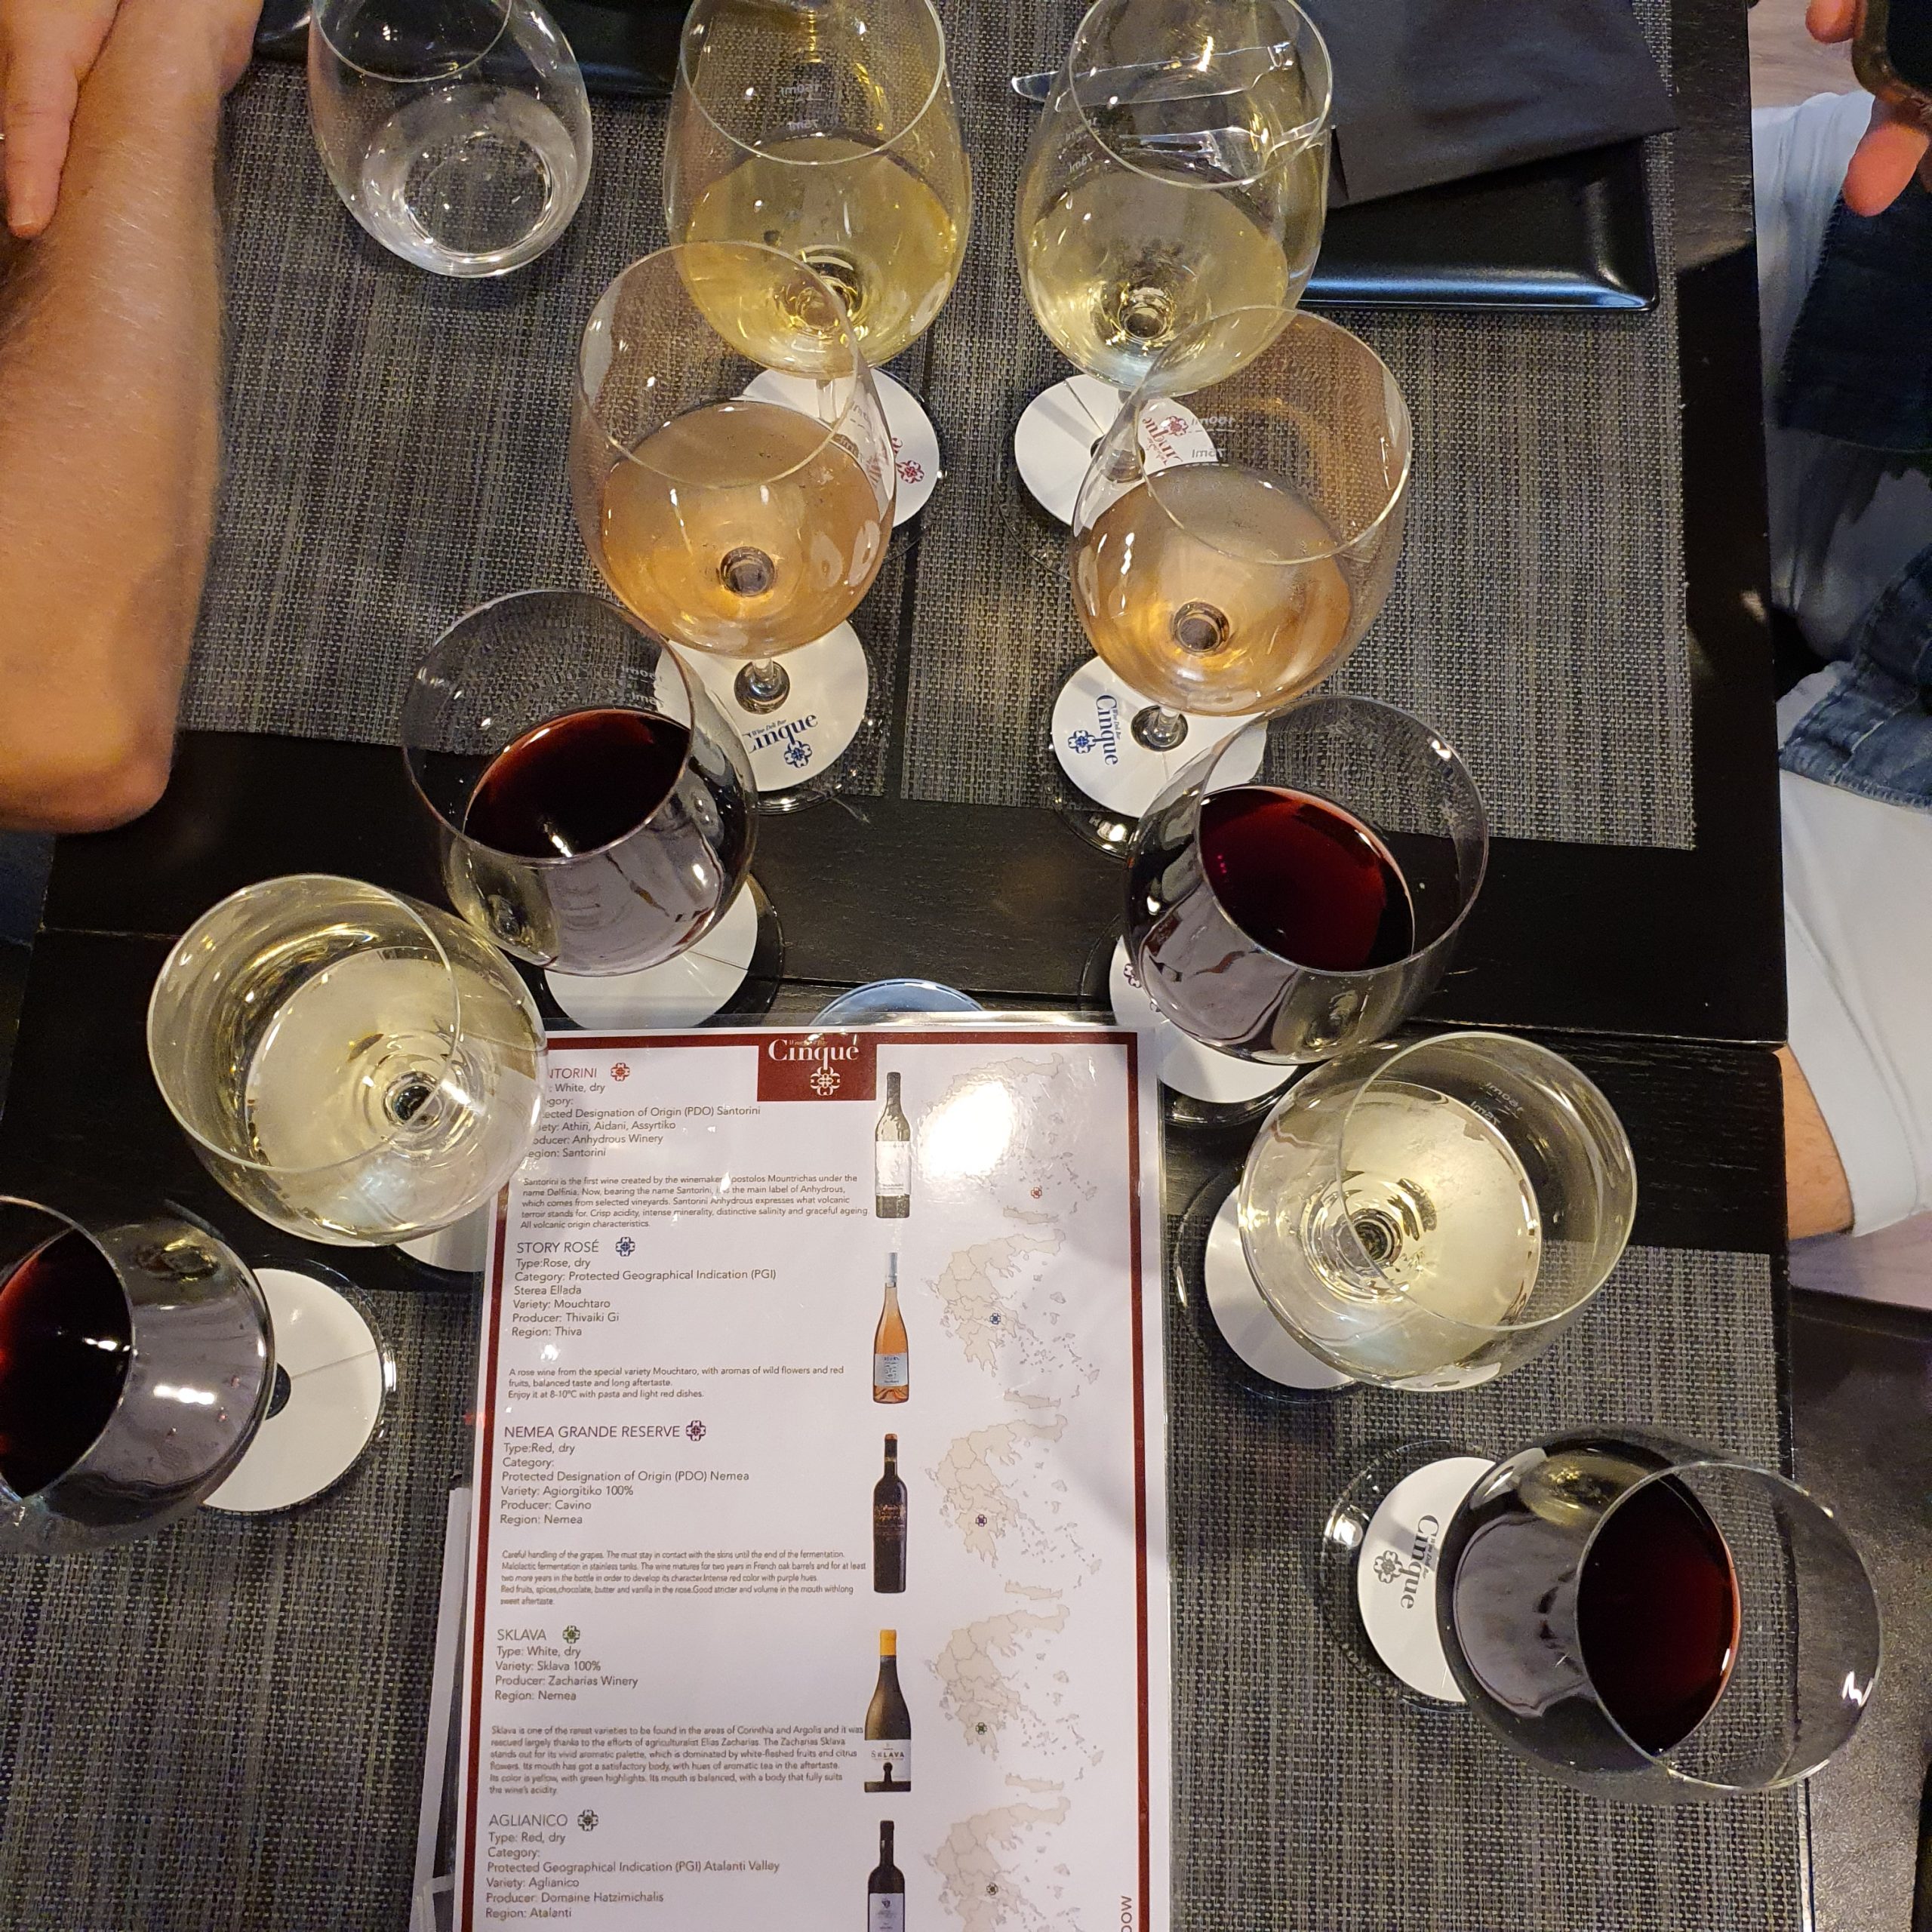 Cinque Wine Deli Bar: H πιο δημιουργική κοινότητα γύρω από το κρασί!